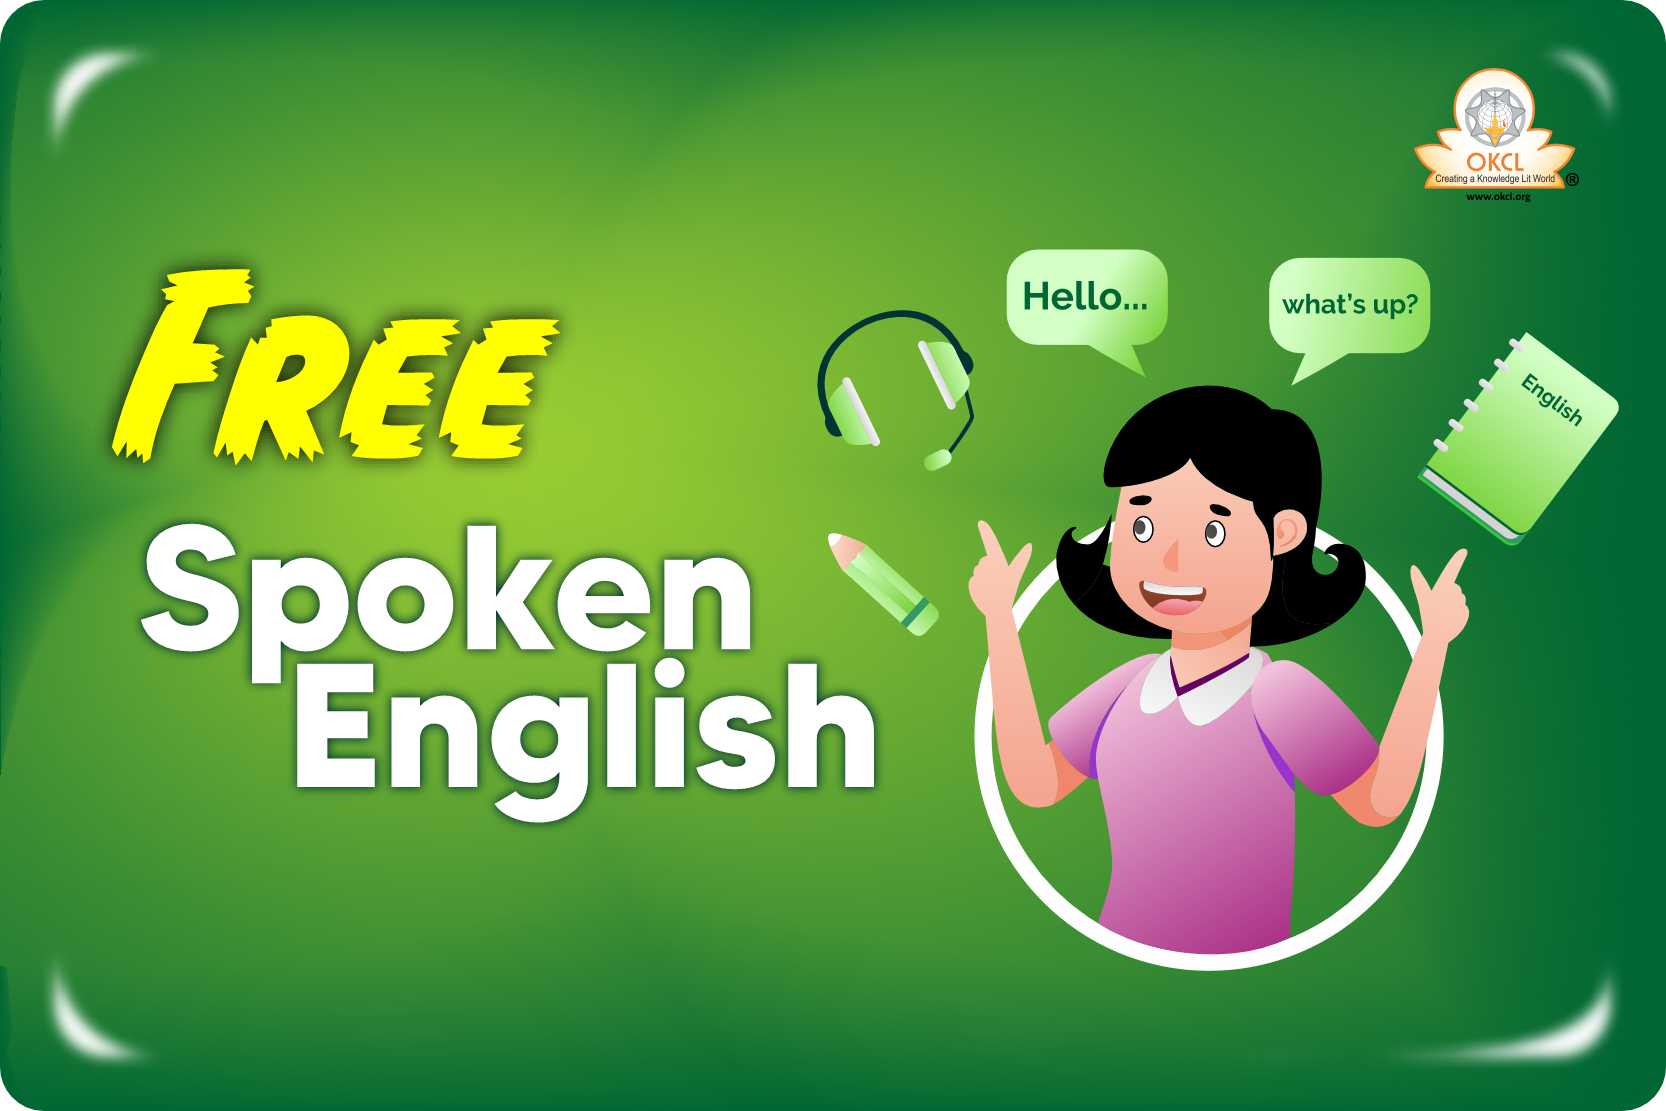 OKCL Spoken English Course (Free)